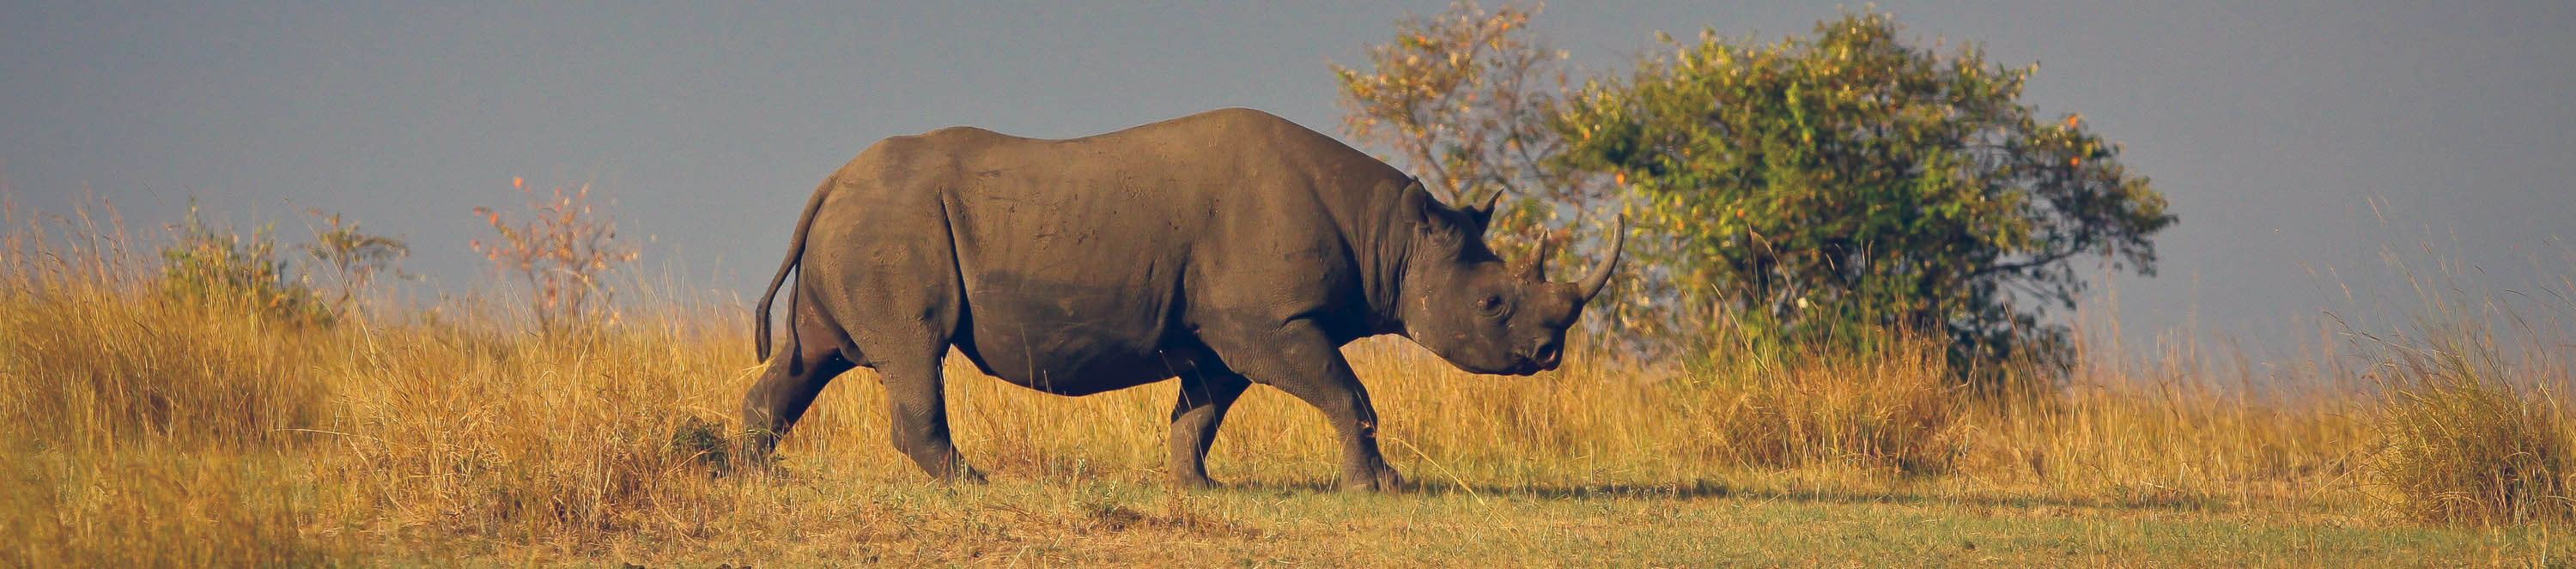 Rhino in Laikipia, Kenya | Apex Photo Safaris